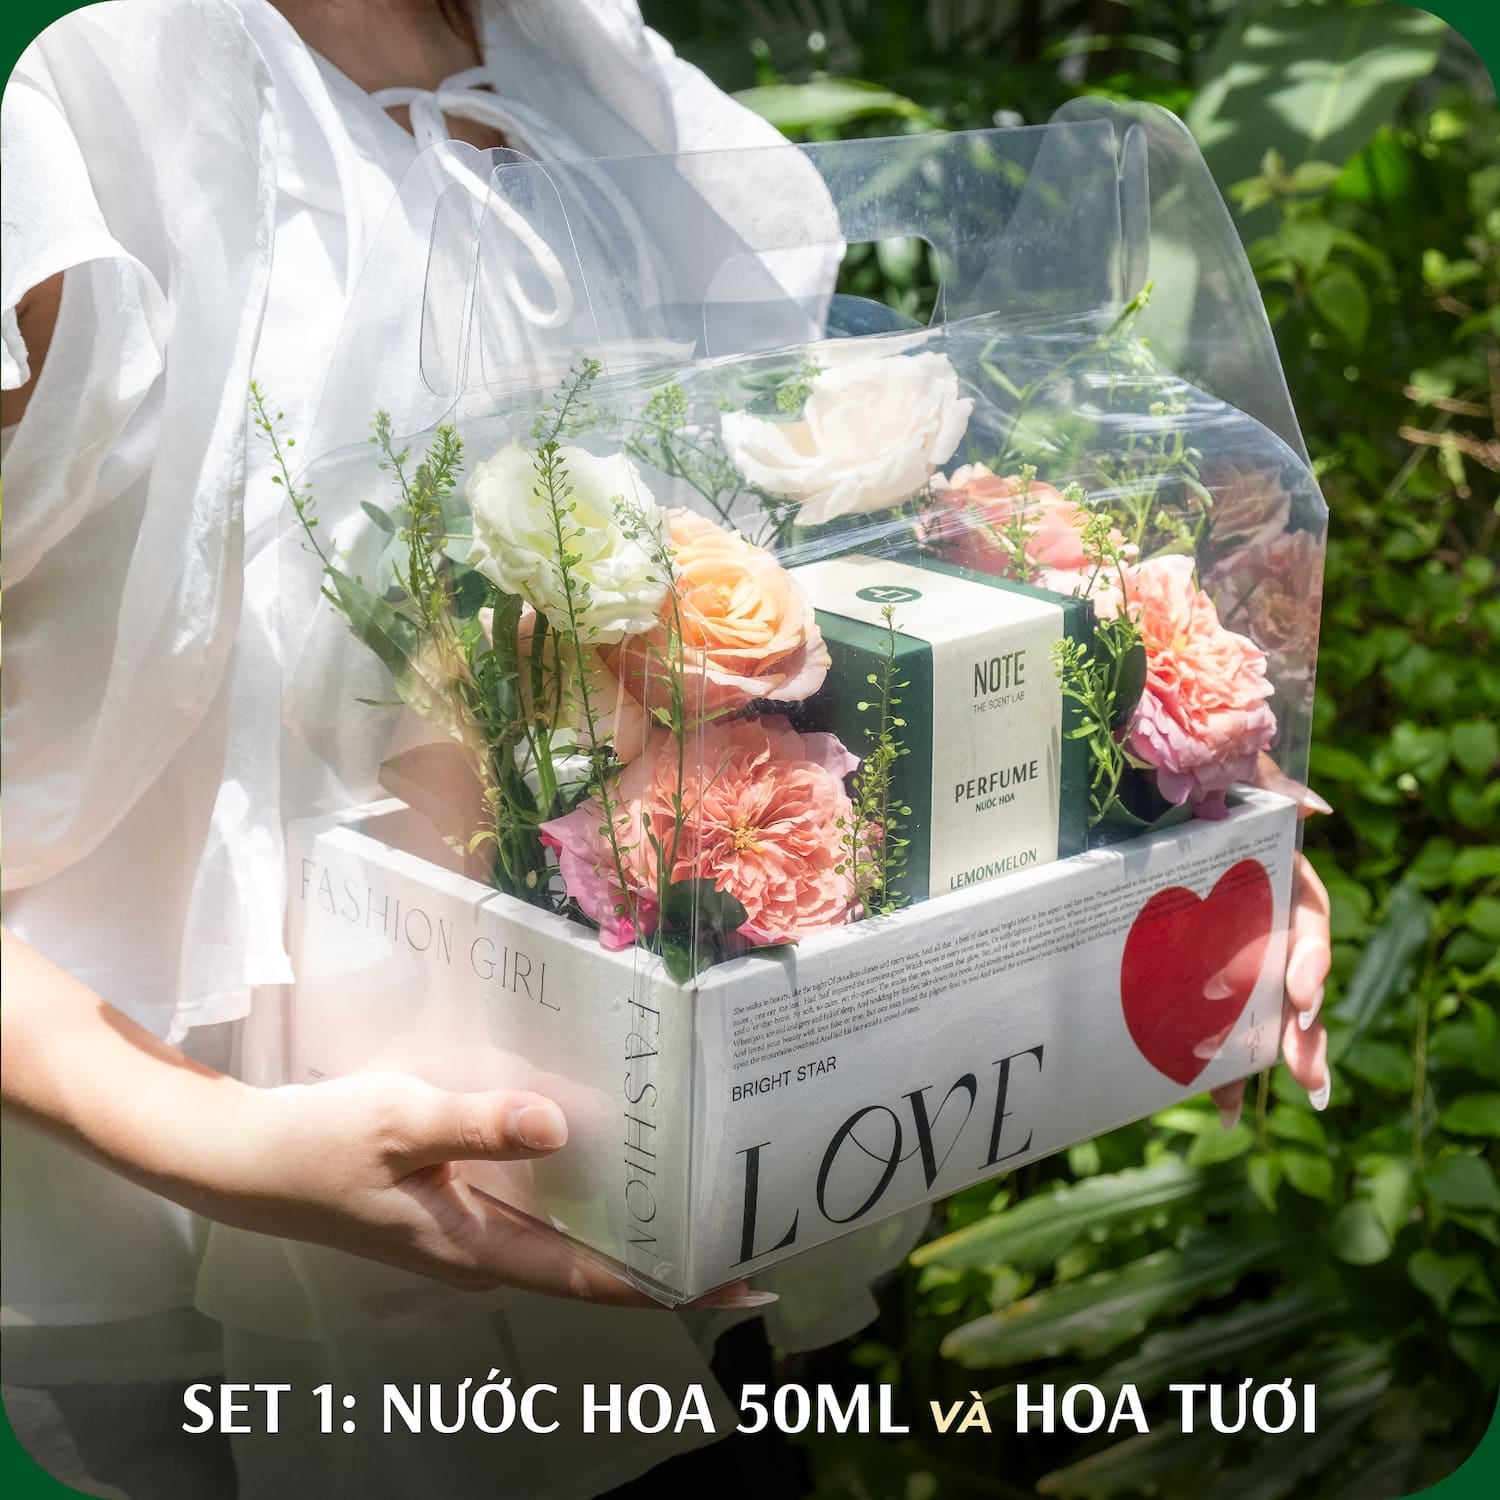 GIFTSET 1 - NUOC HOA 50ML VA HOA TUOI - sản phẩm mùi hương từ NOTE - The Scent Lab